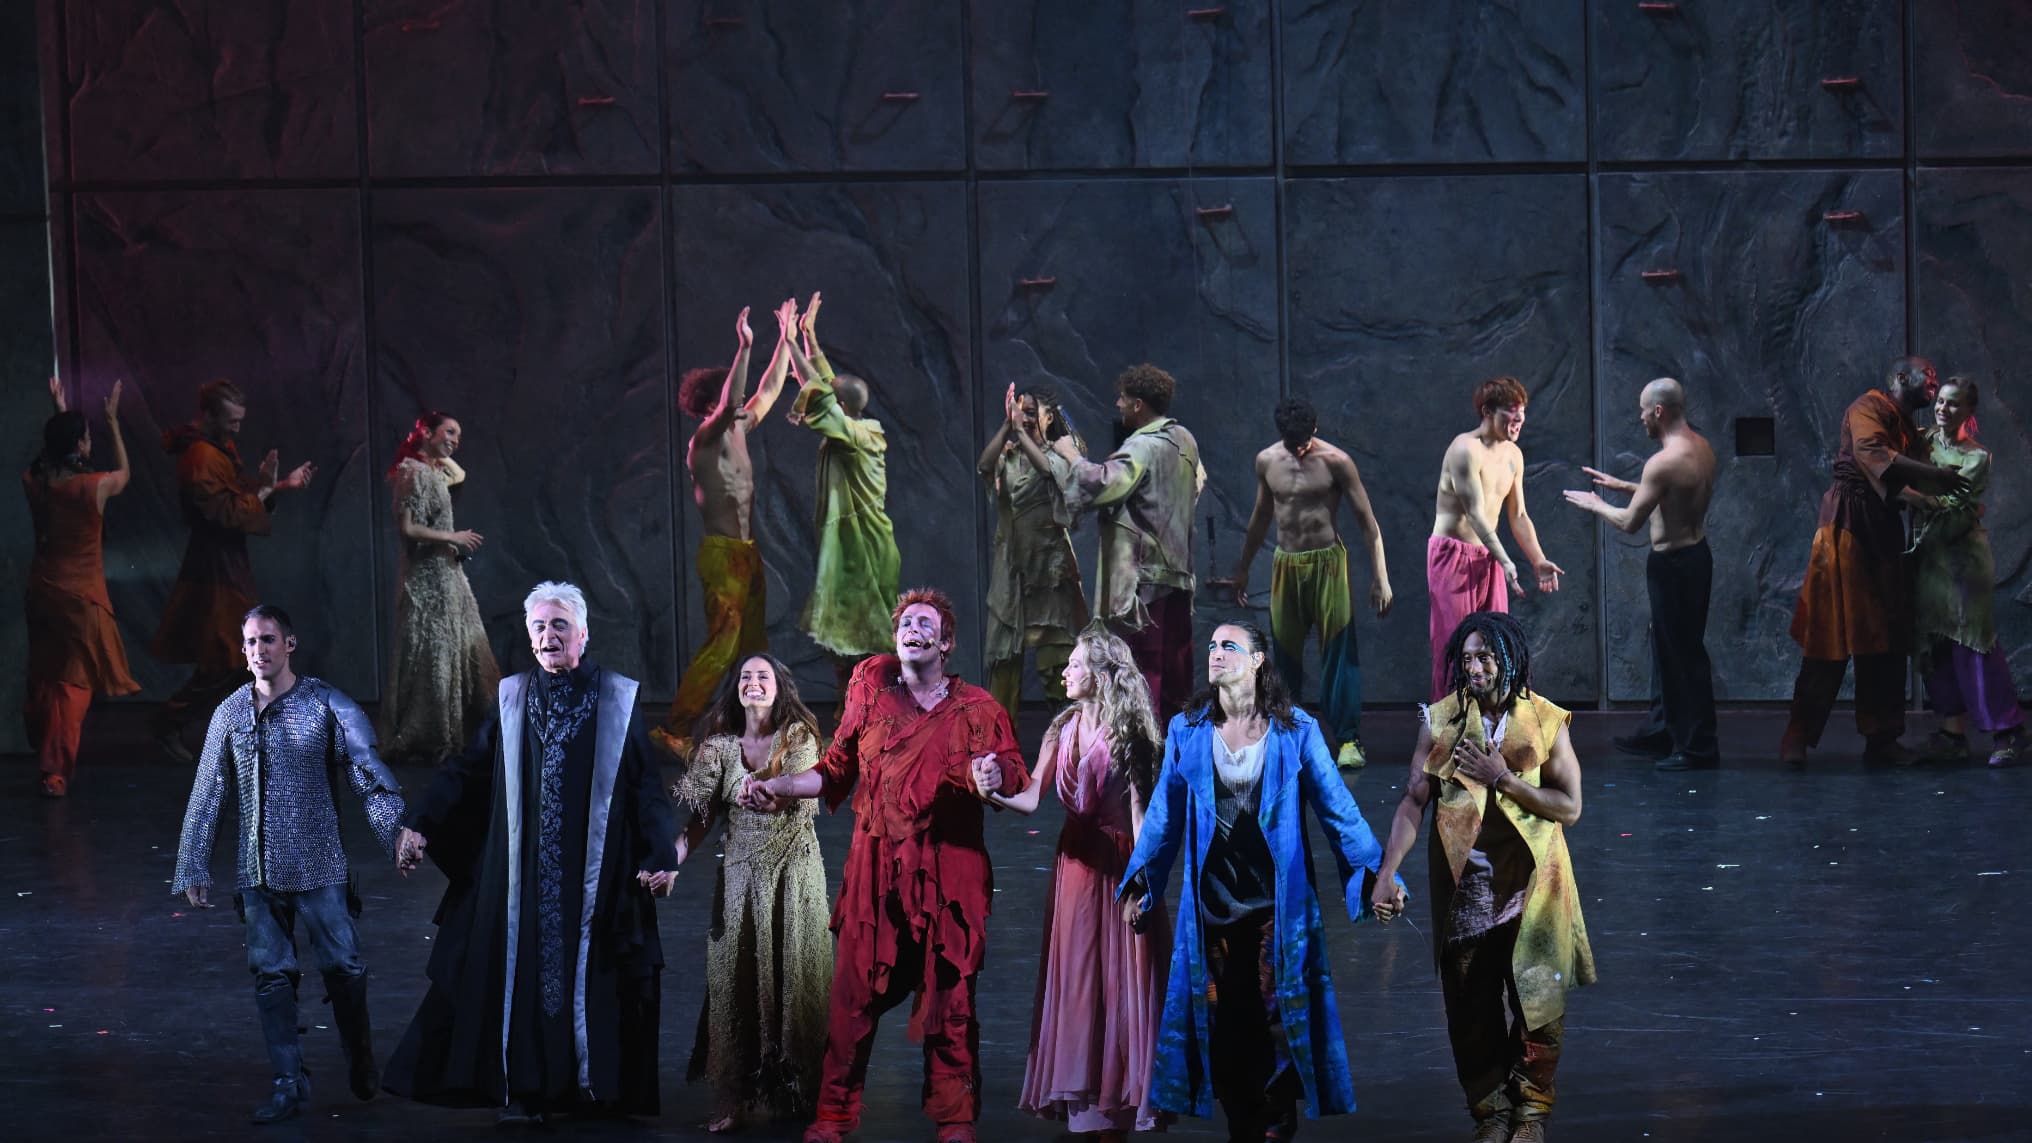 The musical "Notre Dame de Paris" receives a standing ovation for its